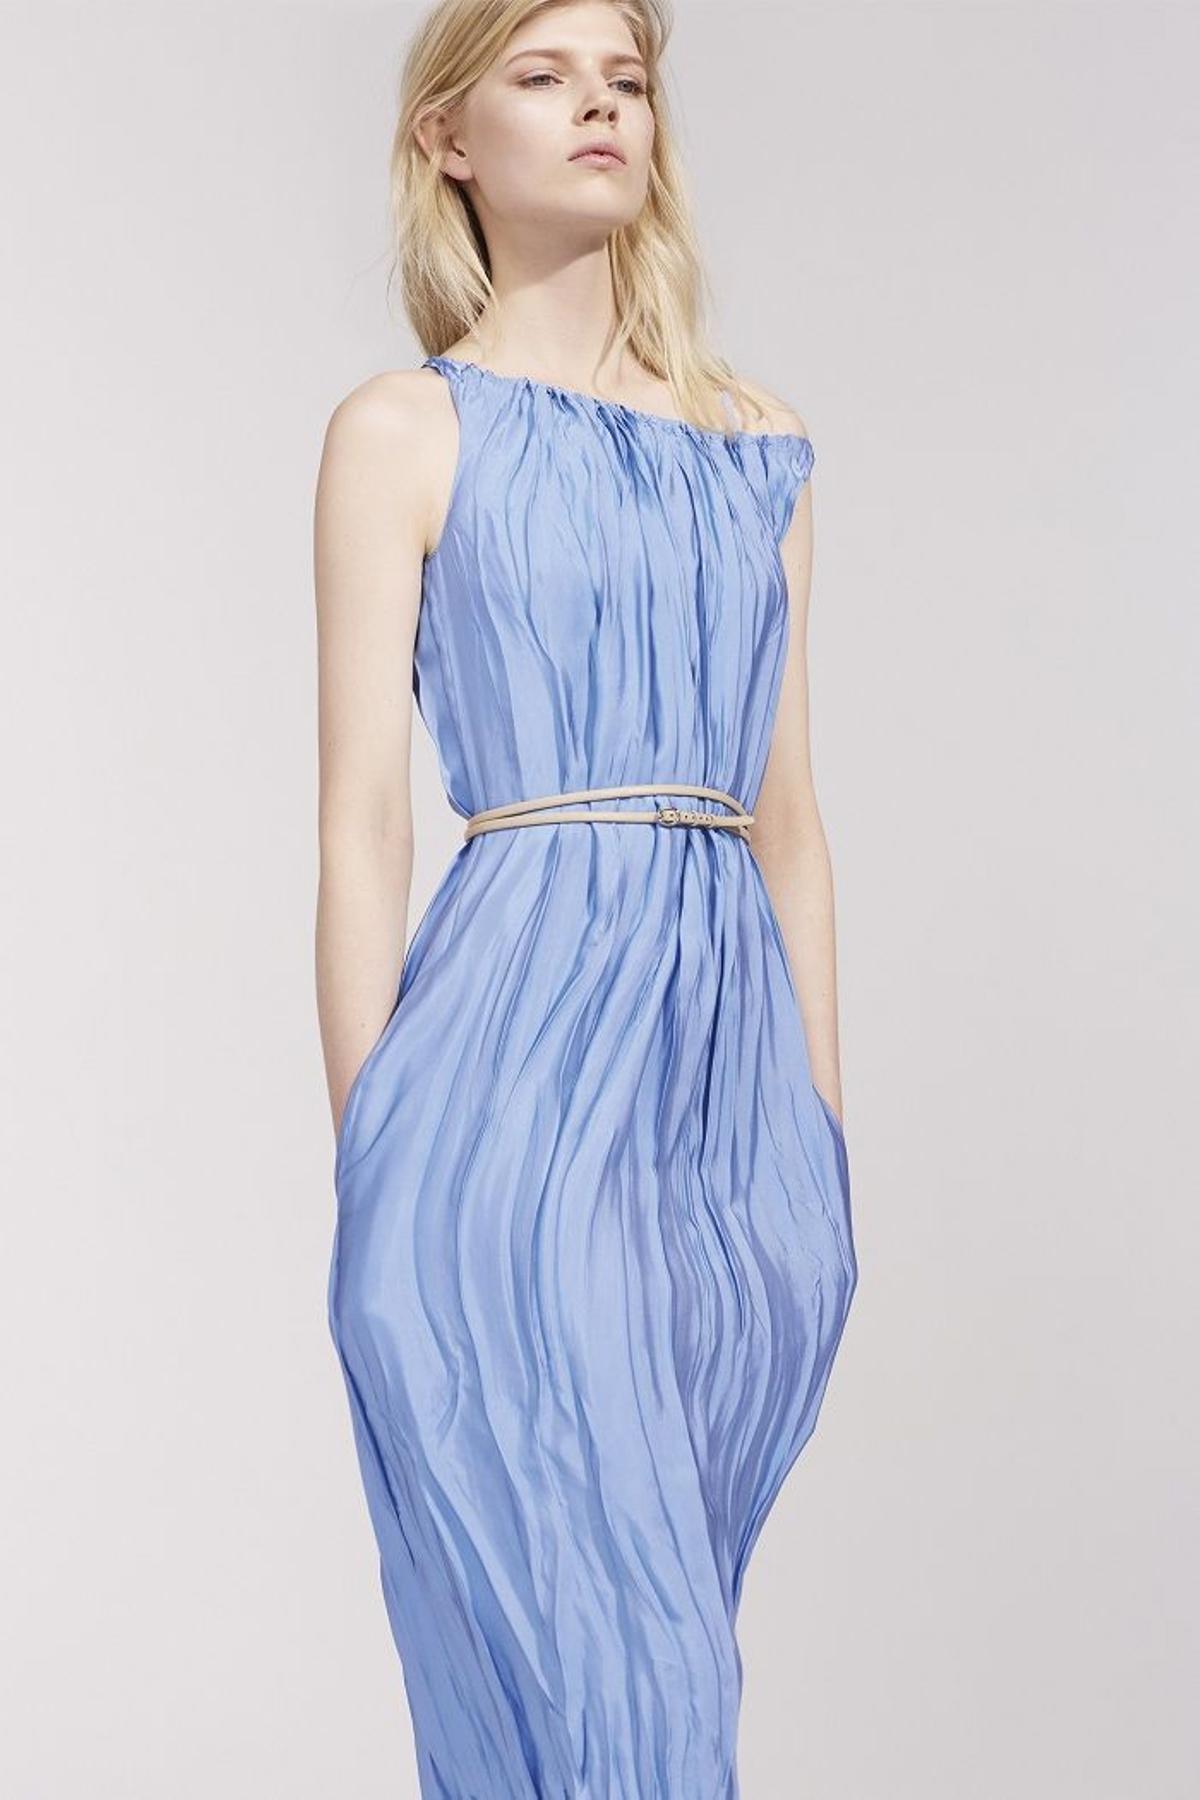 Nina Ricci colección primavera 2016, vestido azul